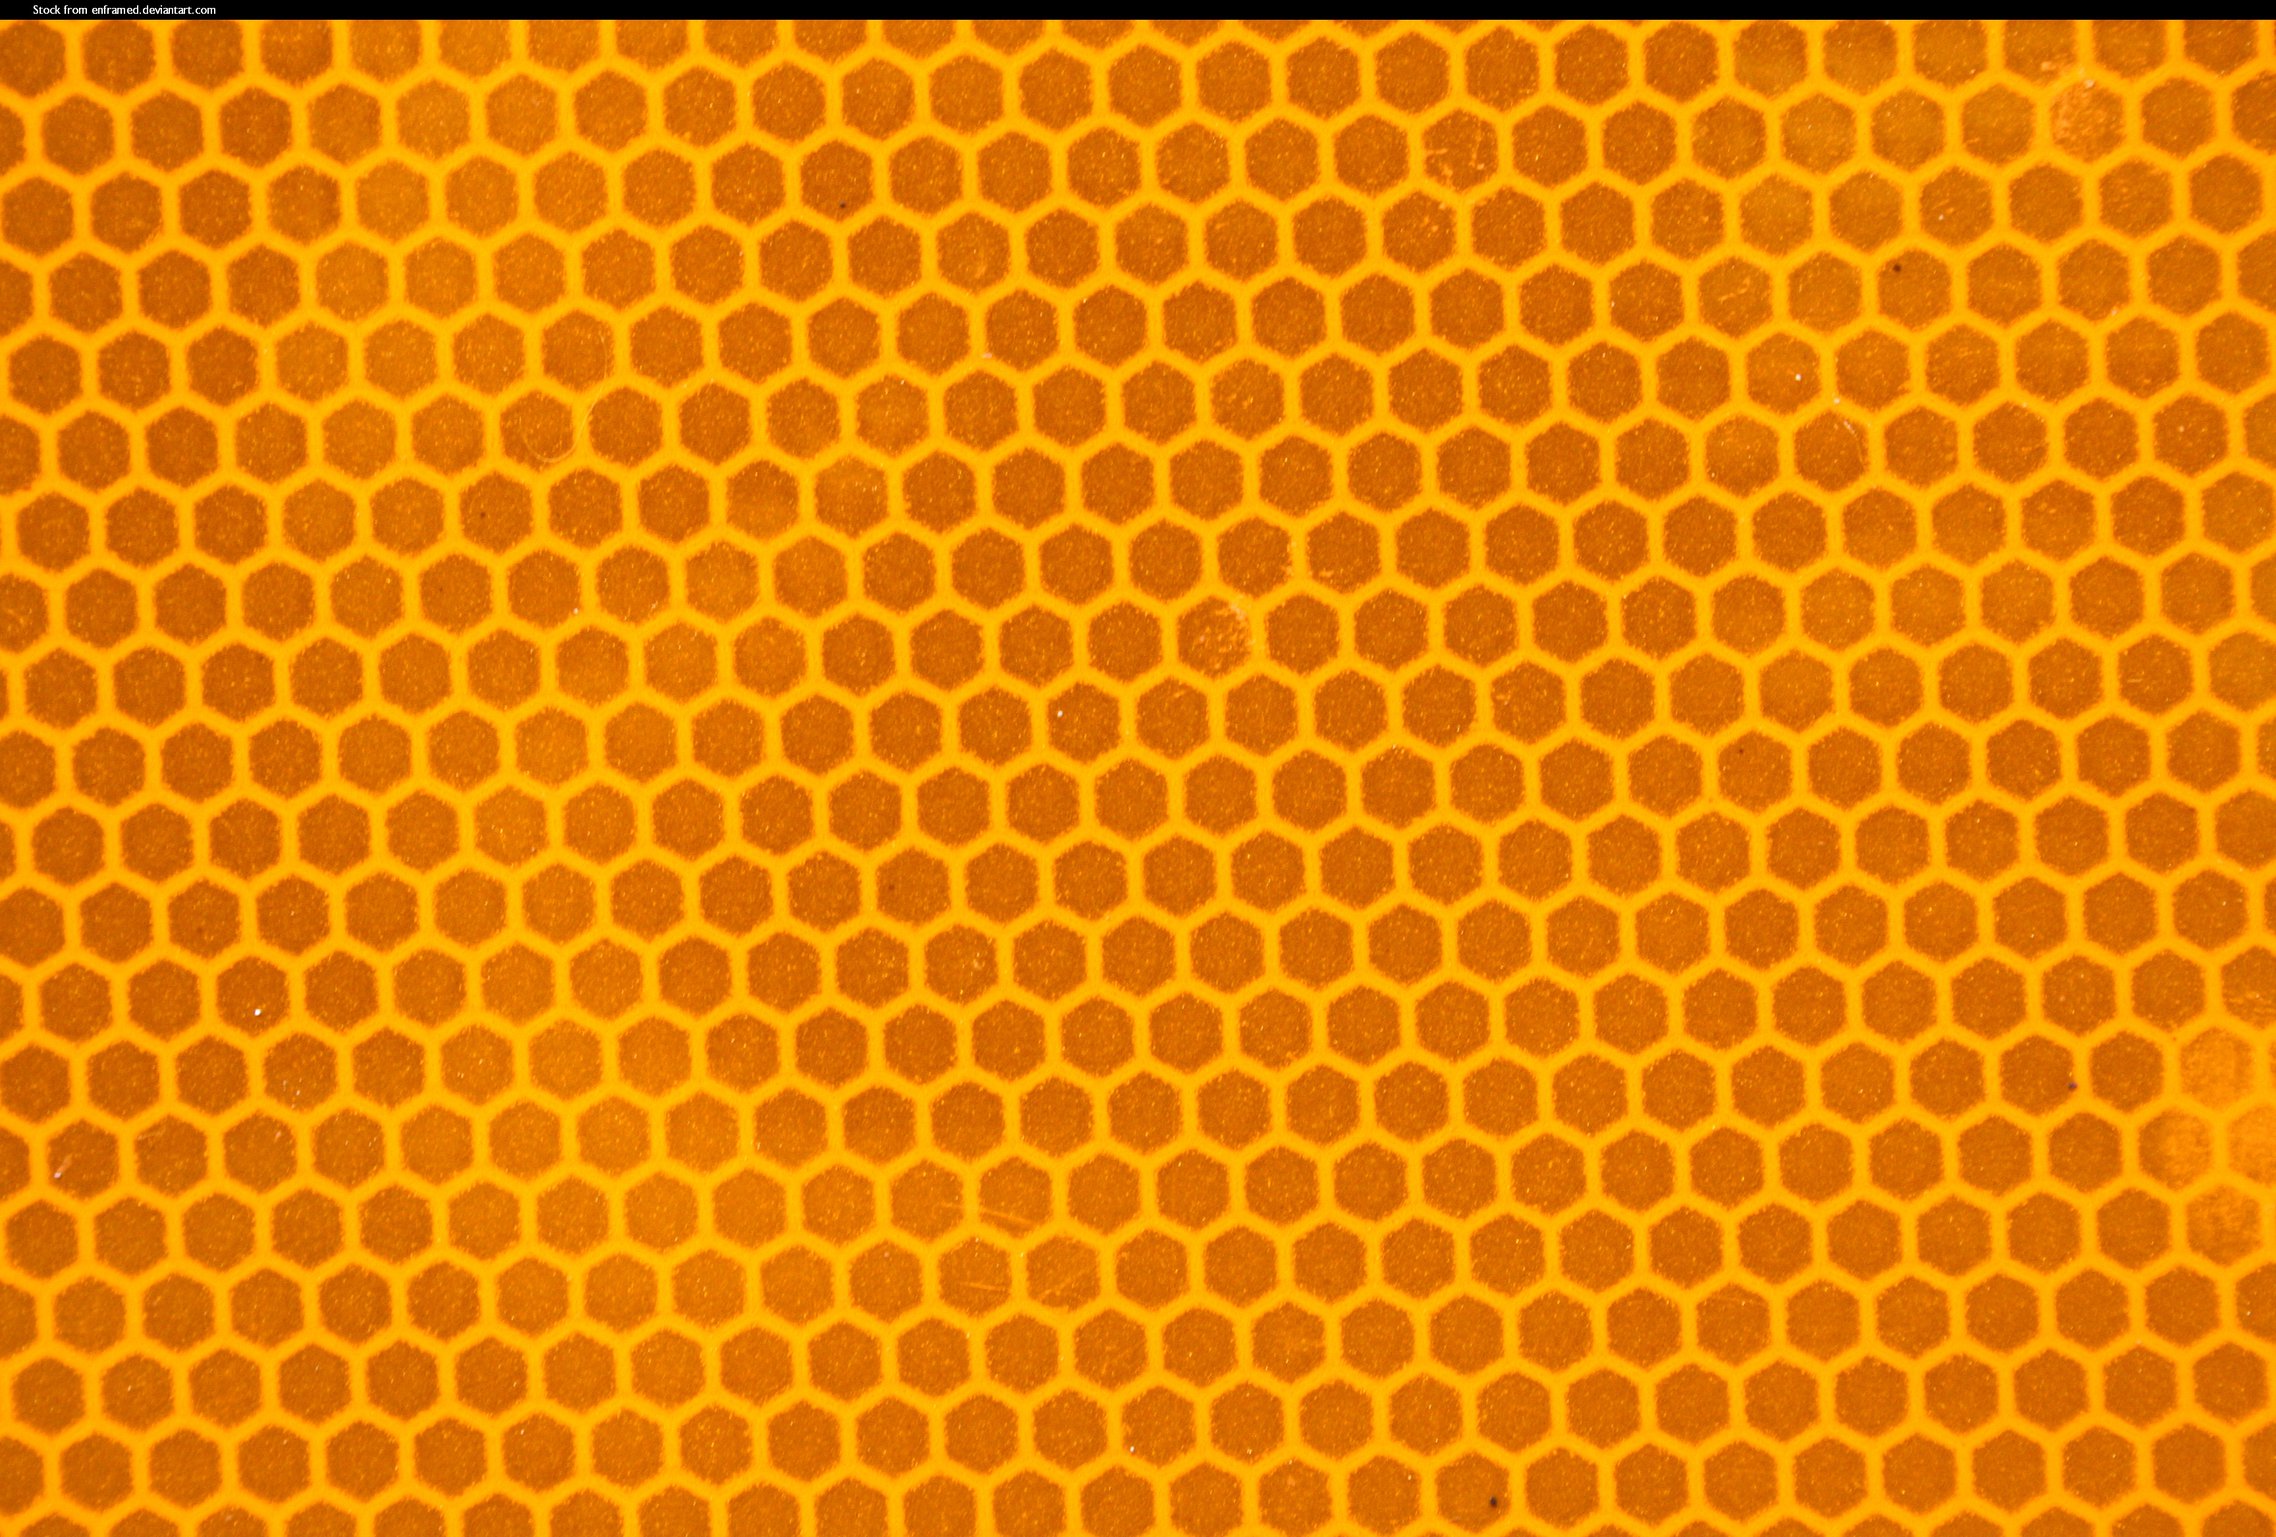 Honey texture by enframed on DeviantArt